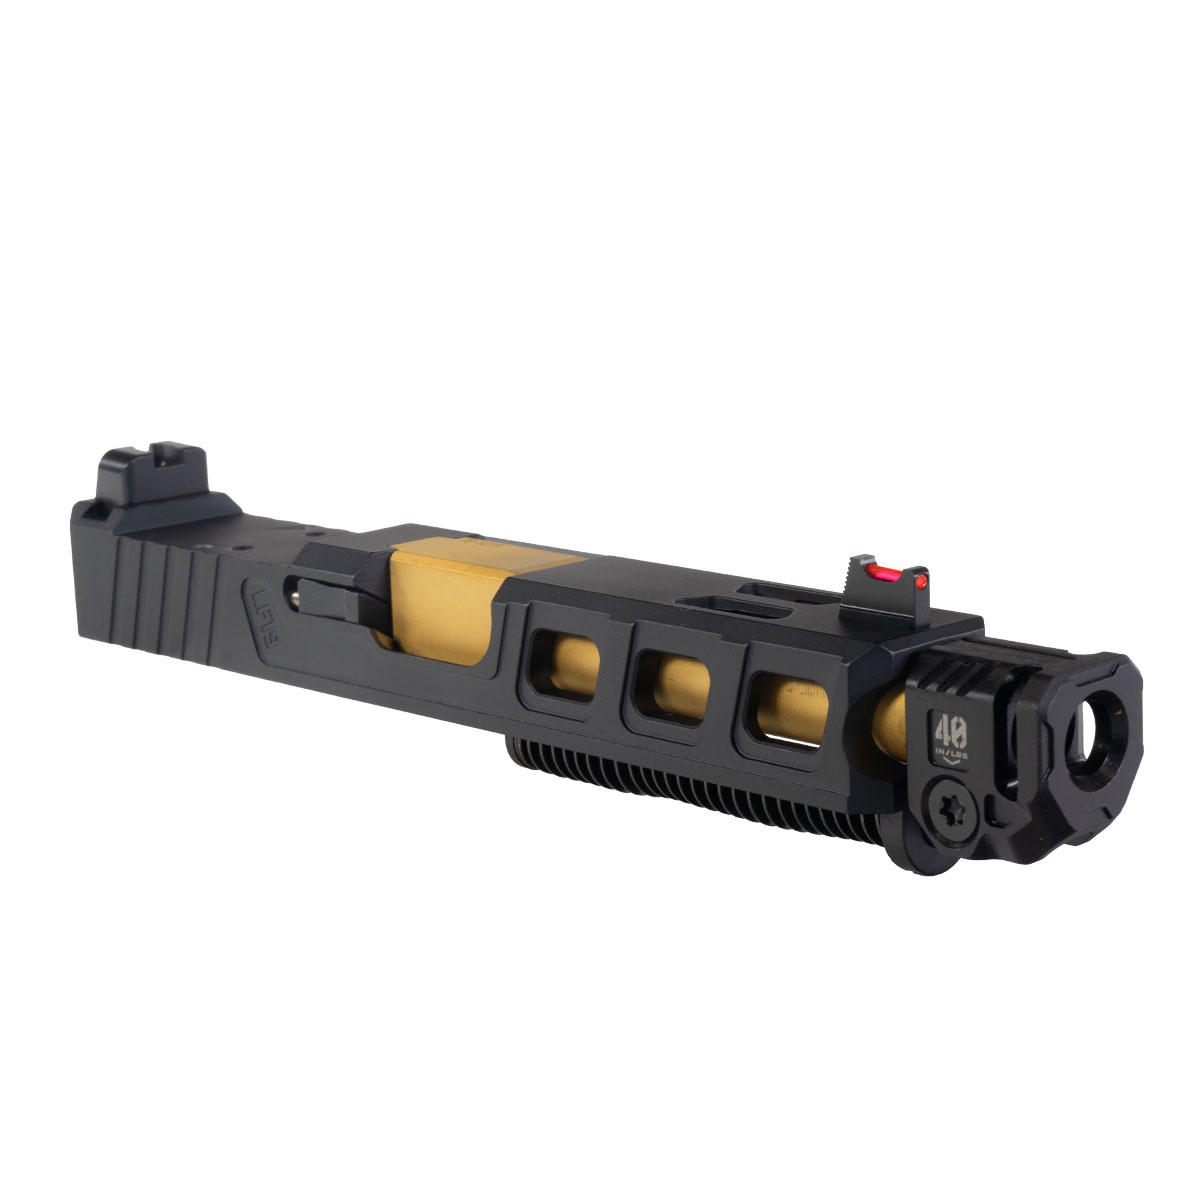 DD 'Dangan w/ Strike Industries Compensator' 9mm Complete Slide Kit - Glock 19 Gen 1-3 Compatible